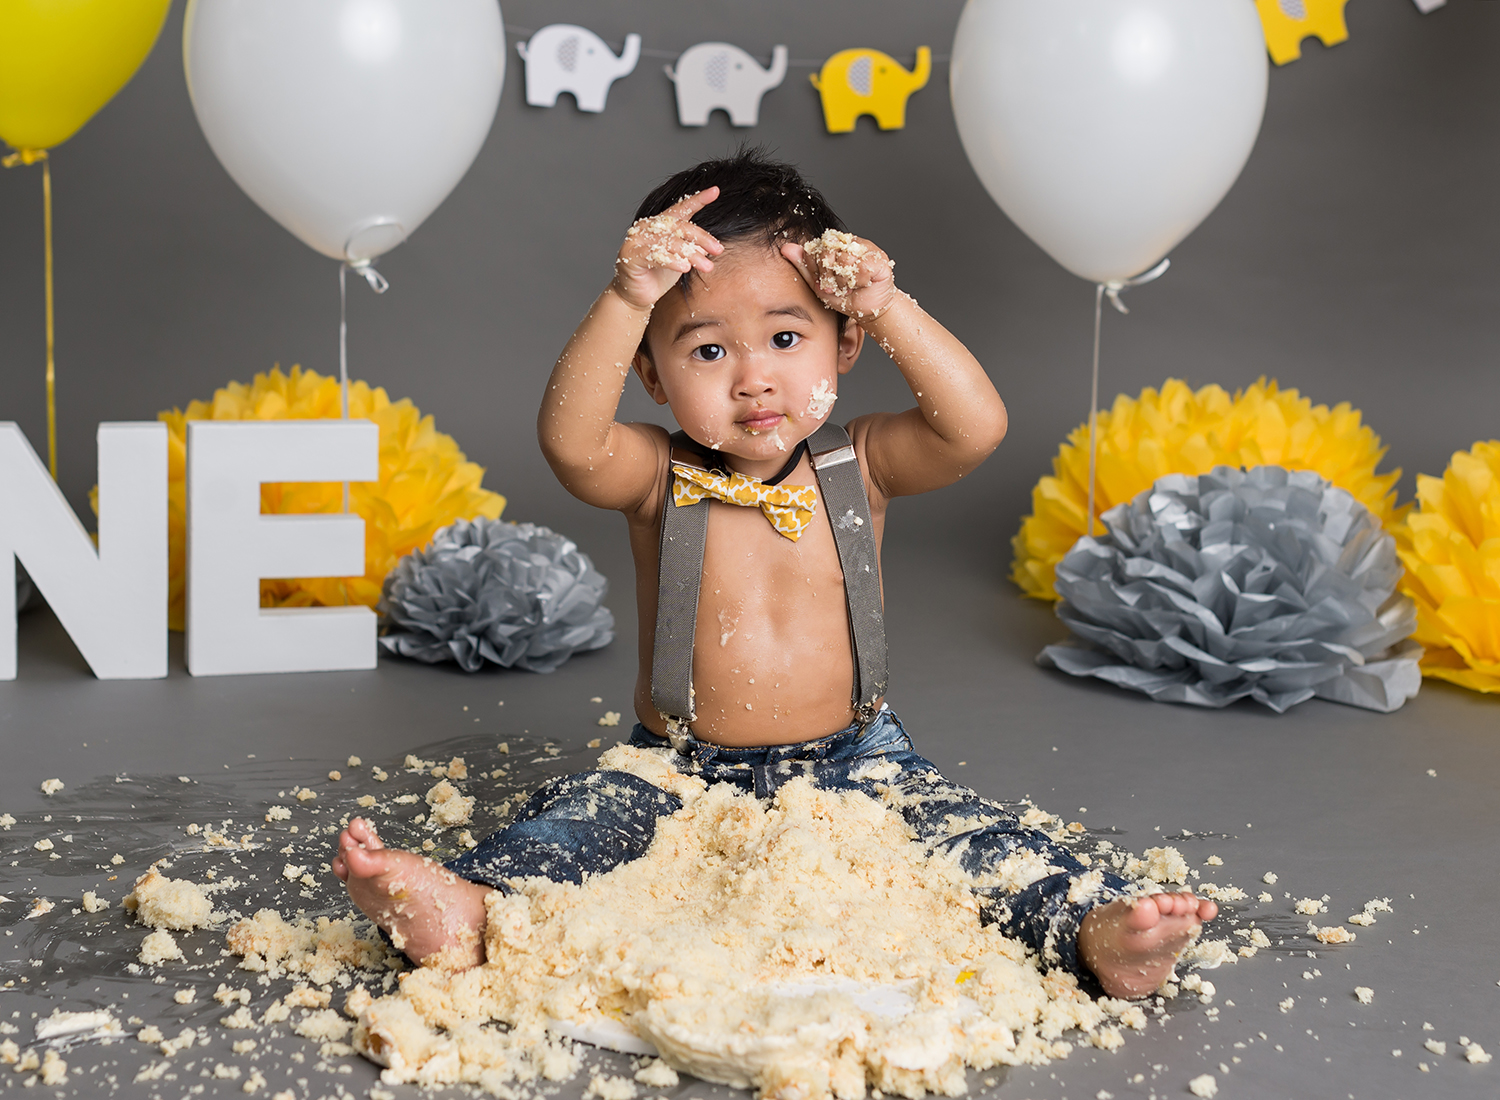 cake smash milestone baby shoot with grey and yellow color elephant theme